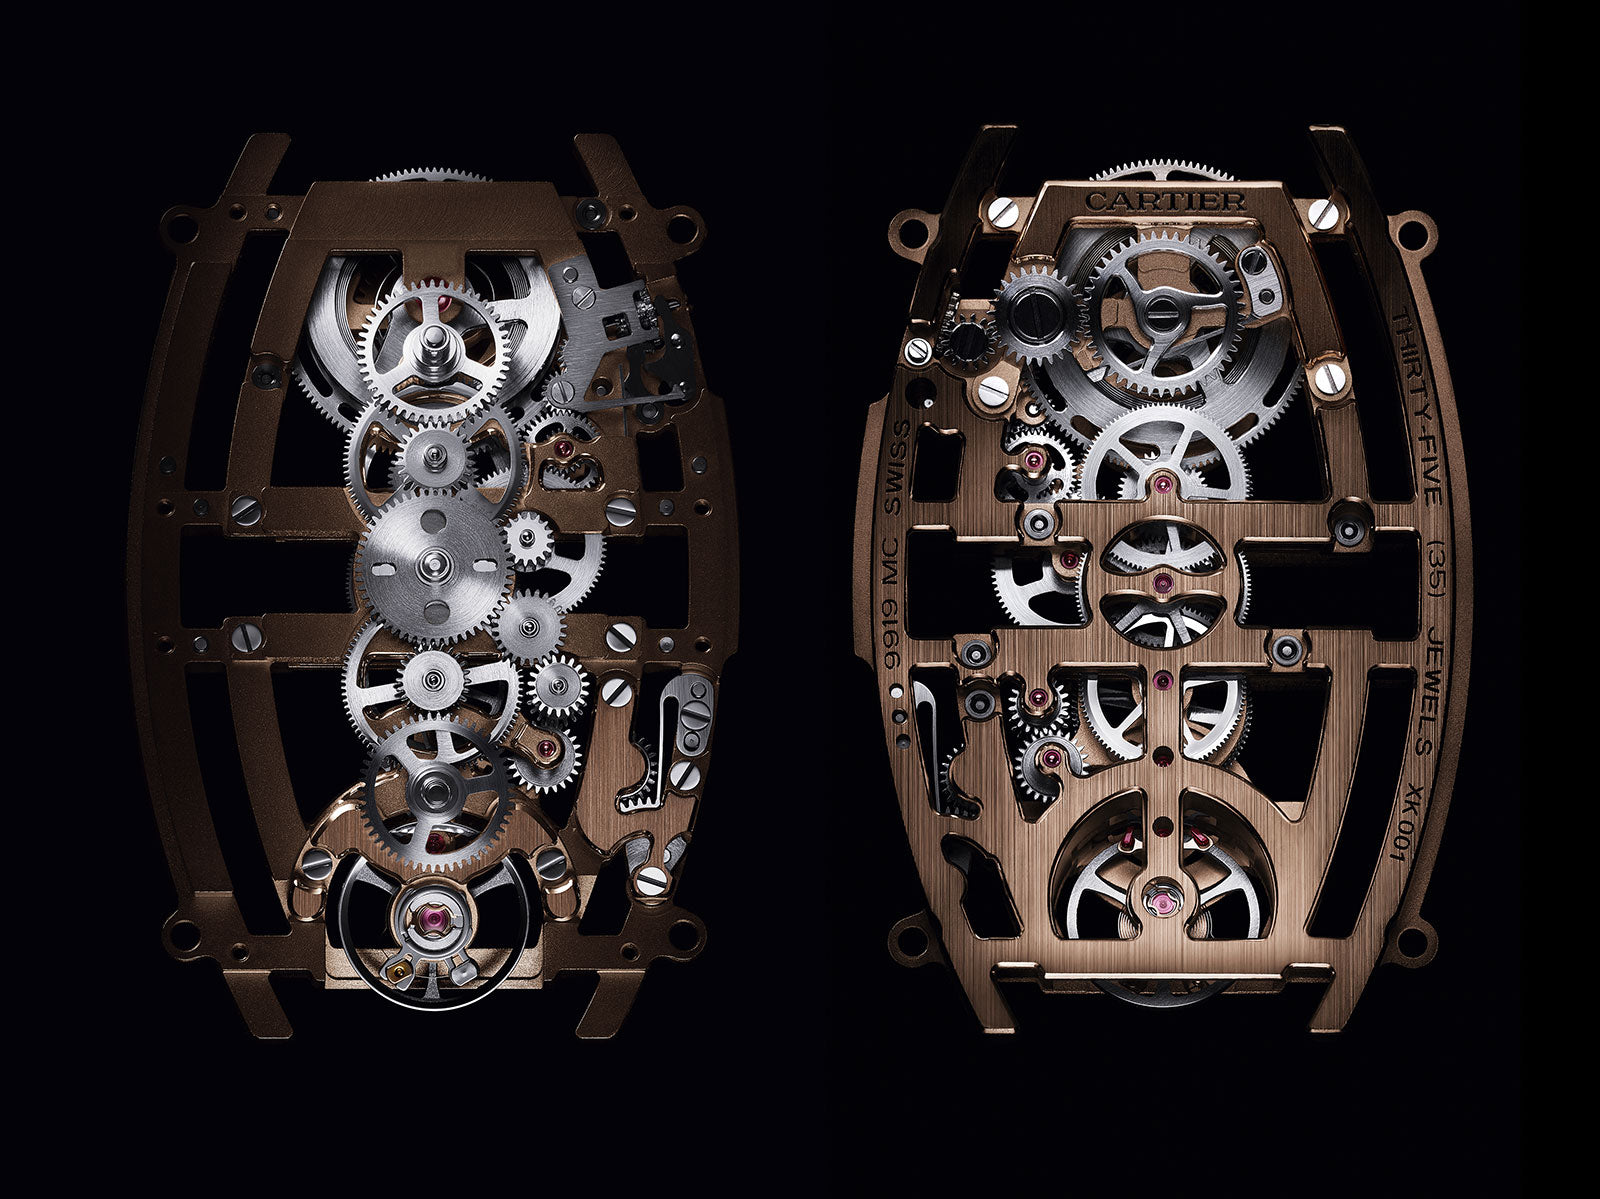 2018 Cartier Privé collection launched the dual time skeleton version of the Tonneau movement Cal.9919MC